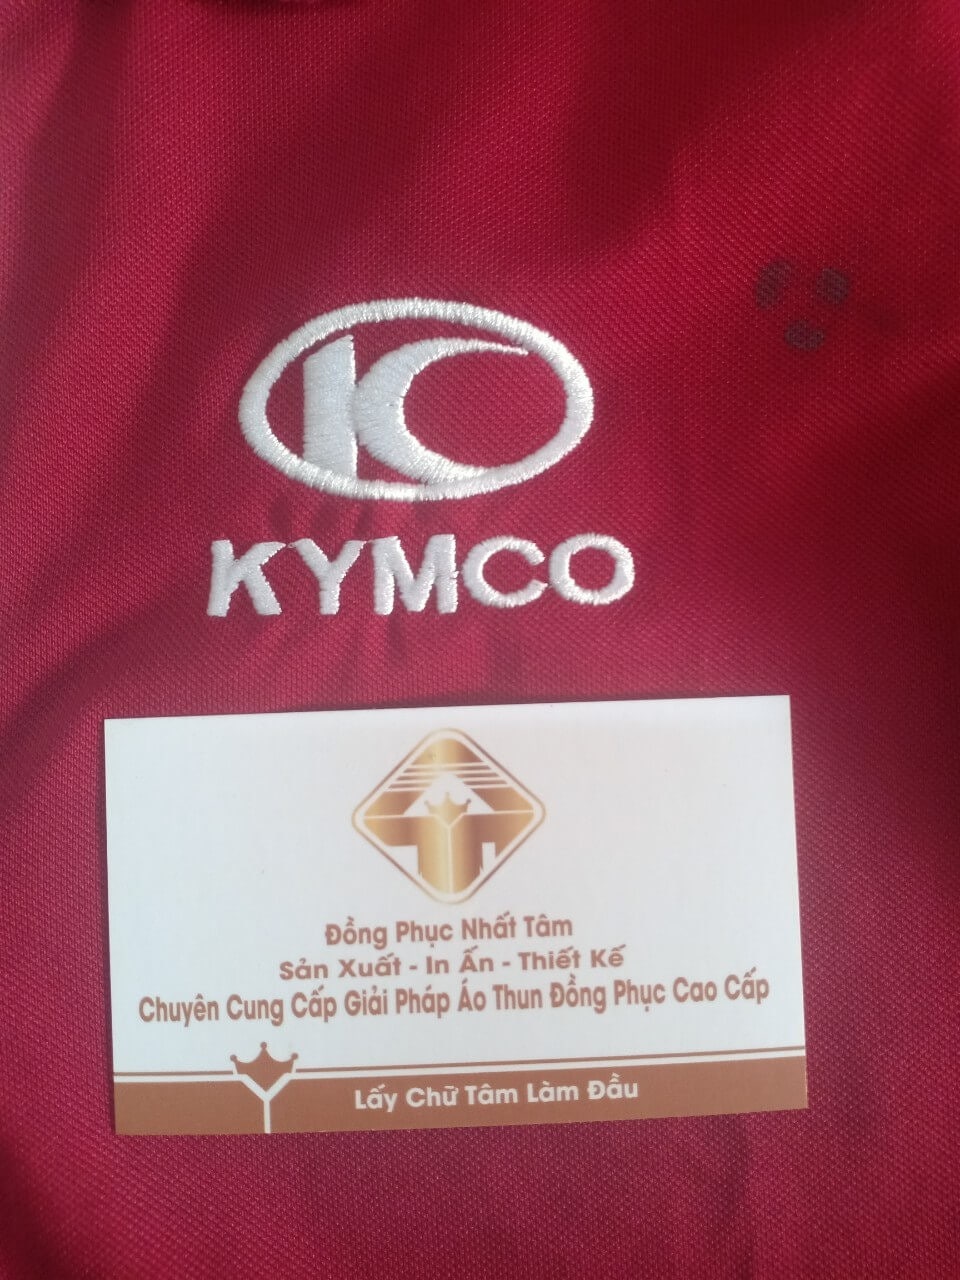 Kymco3